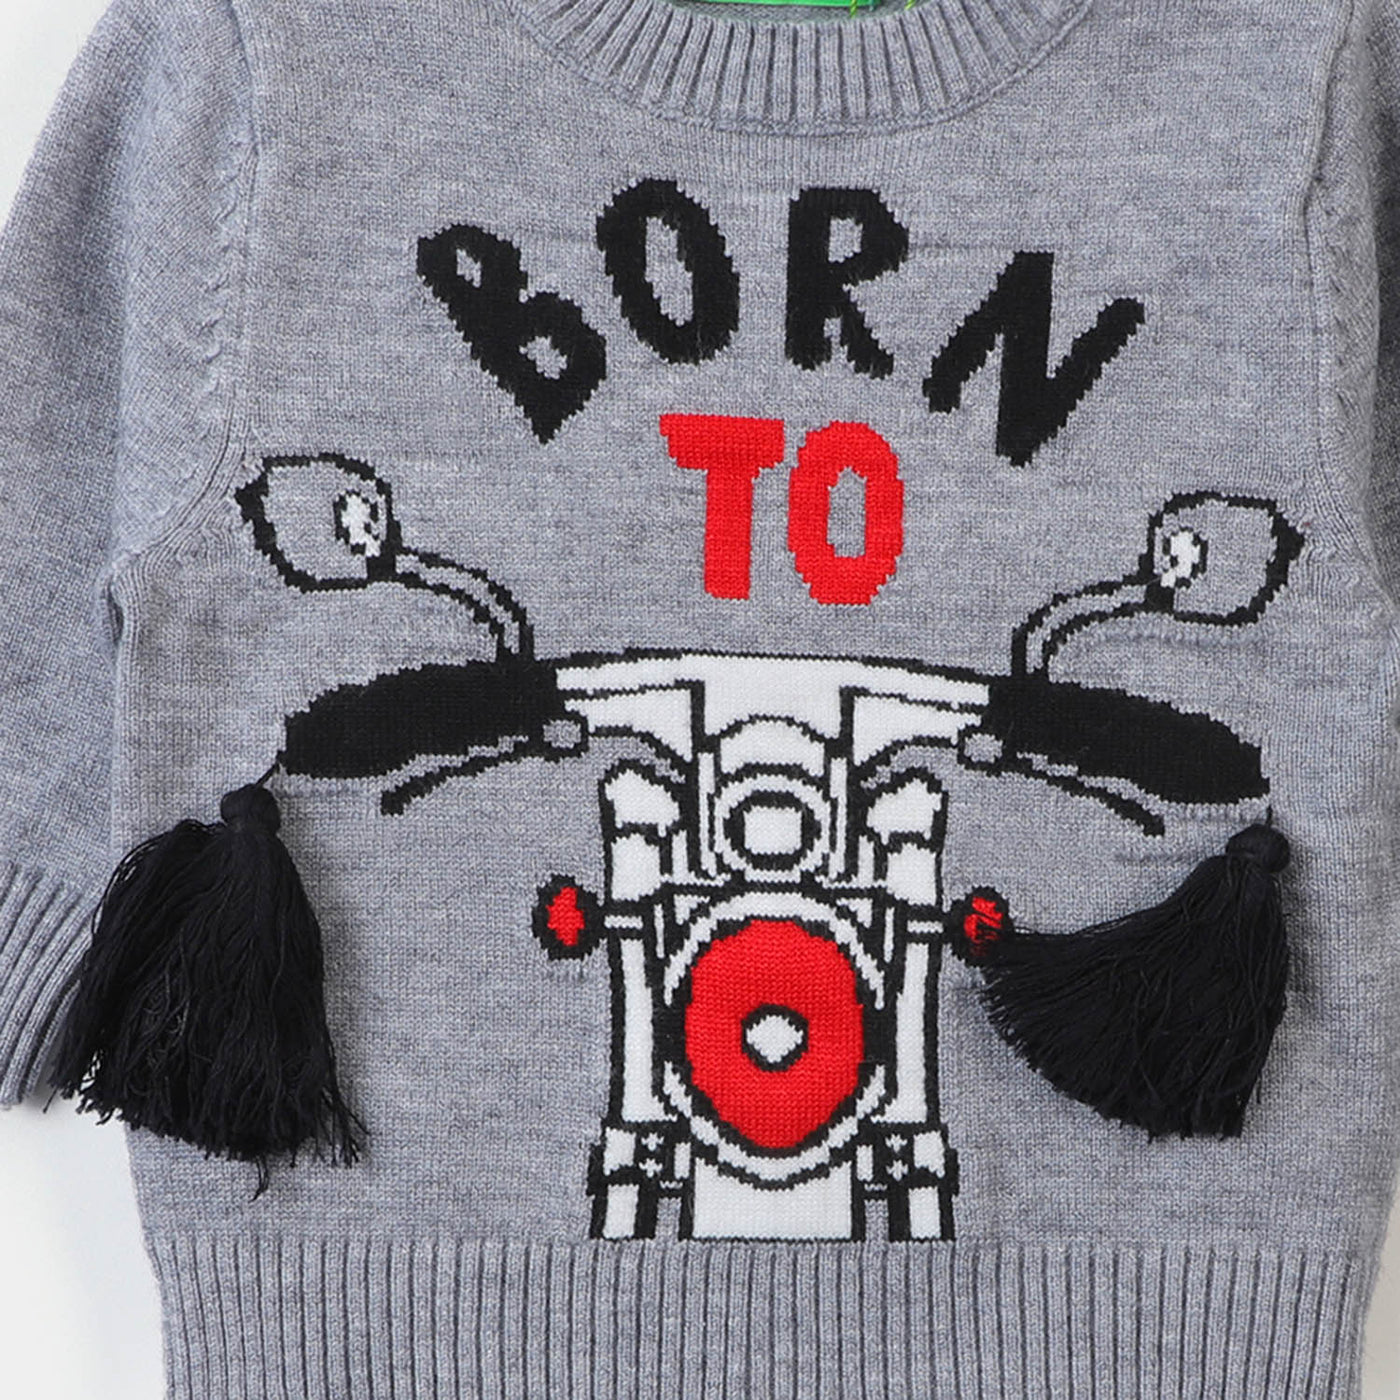 Infant Boys Sweater Born To - GREY